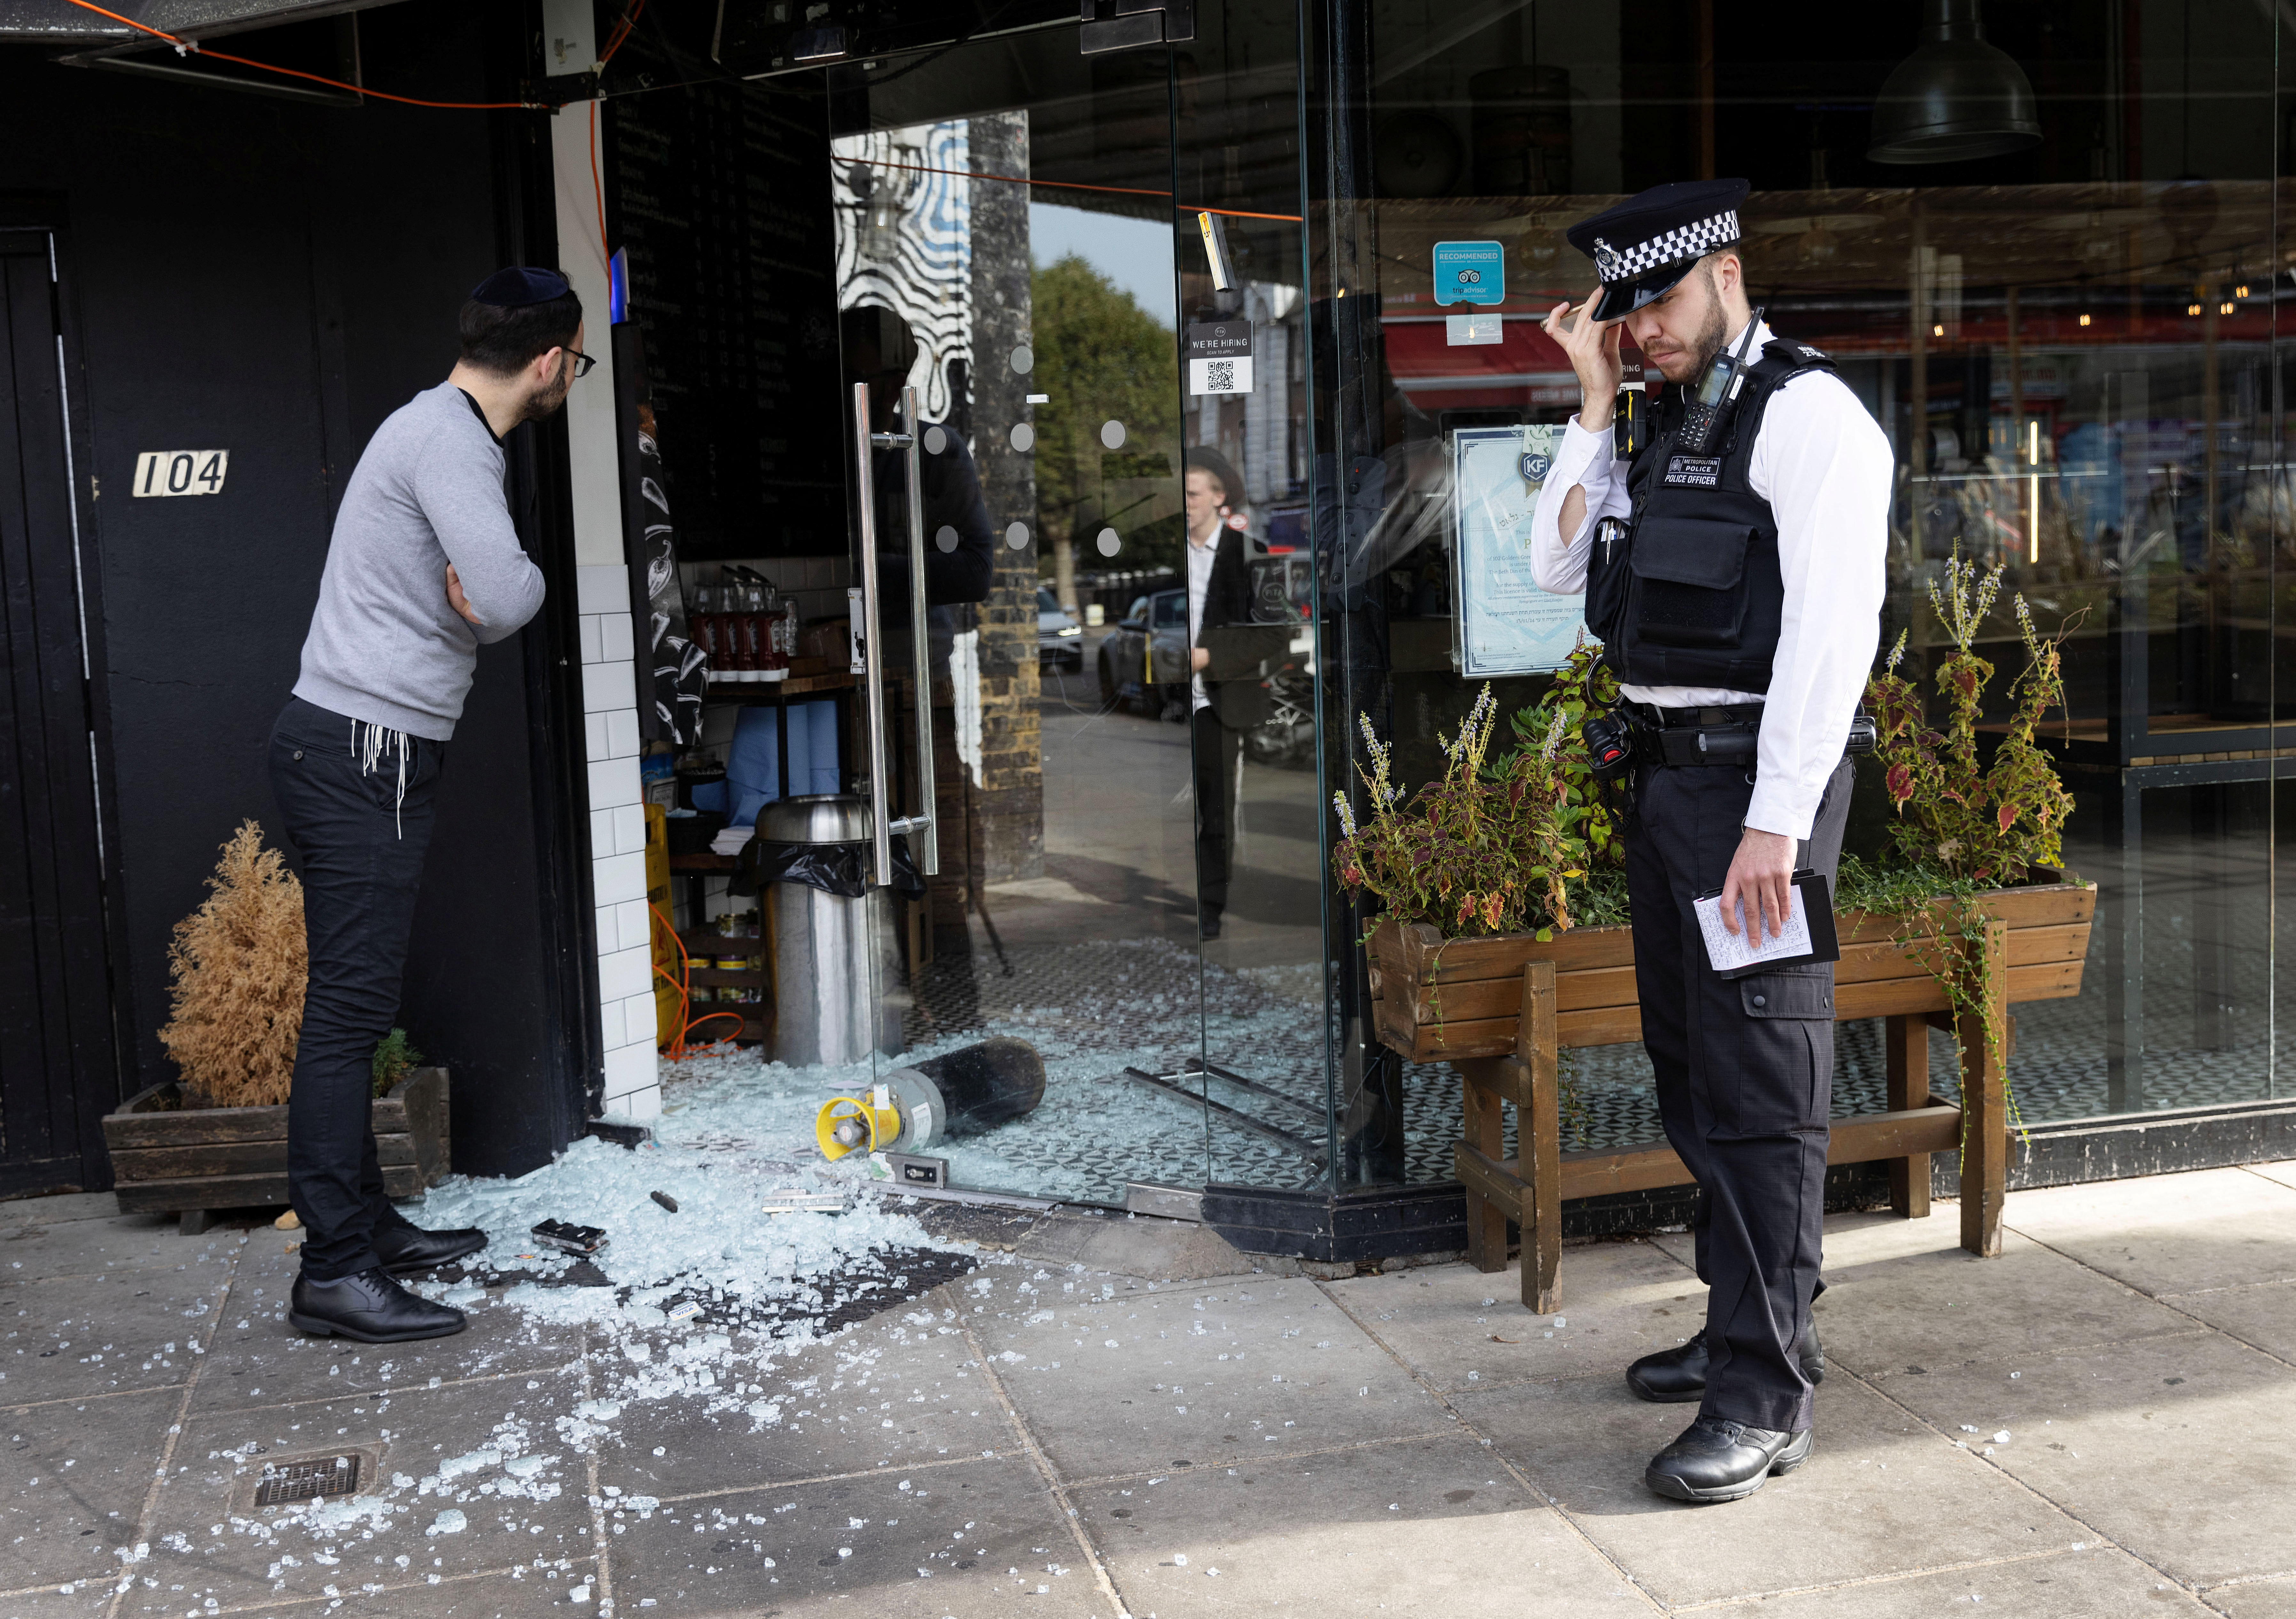 Jewish restaurant vandalised in London